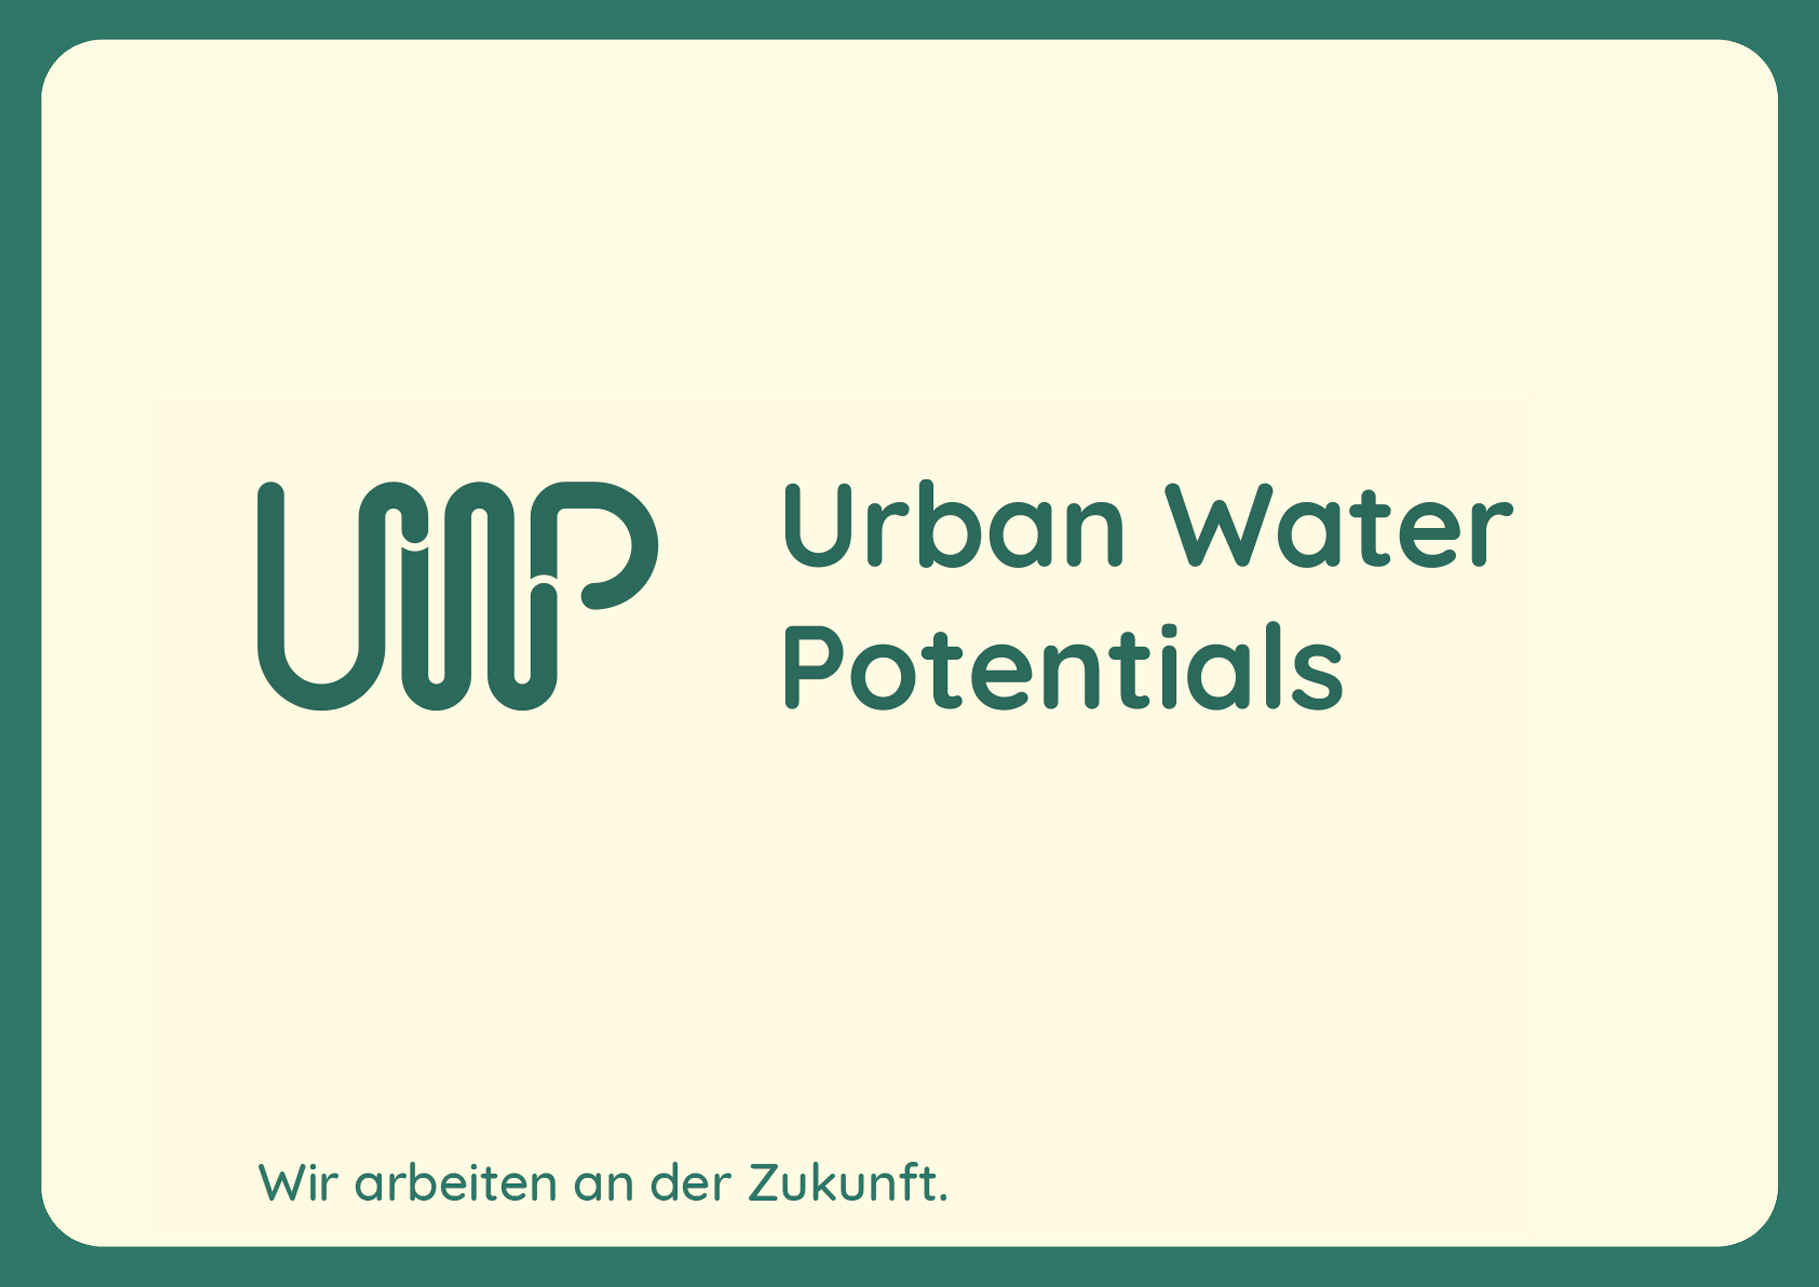 Urban water potentials